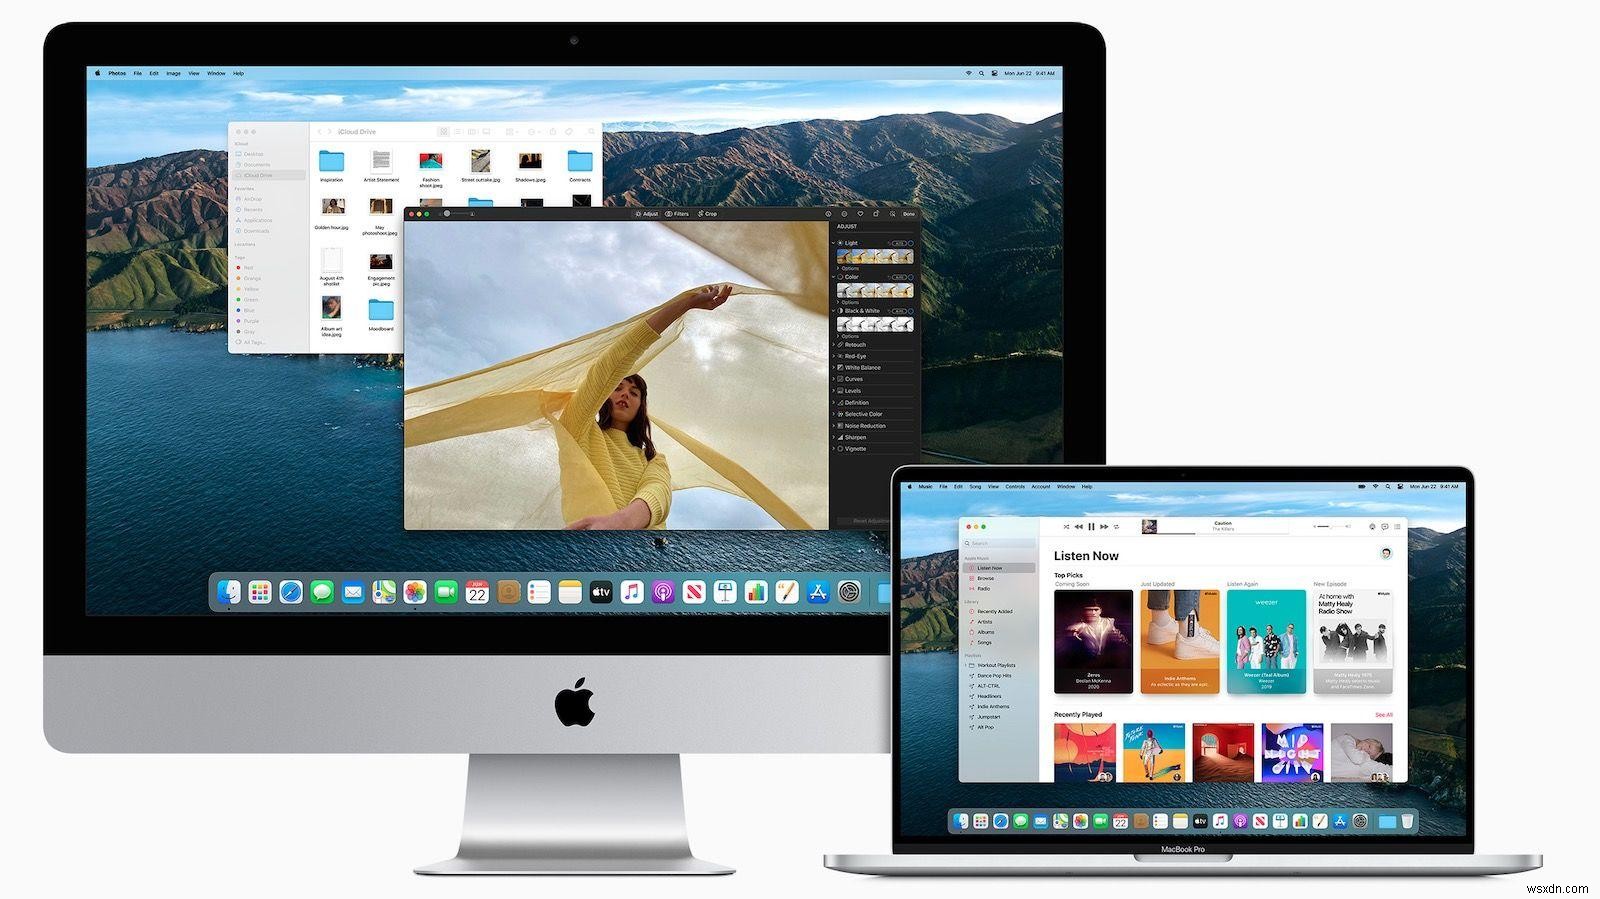 Cách xóa macOS beta khỏi máy Mac 